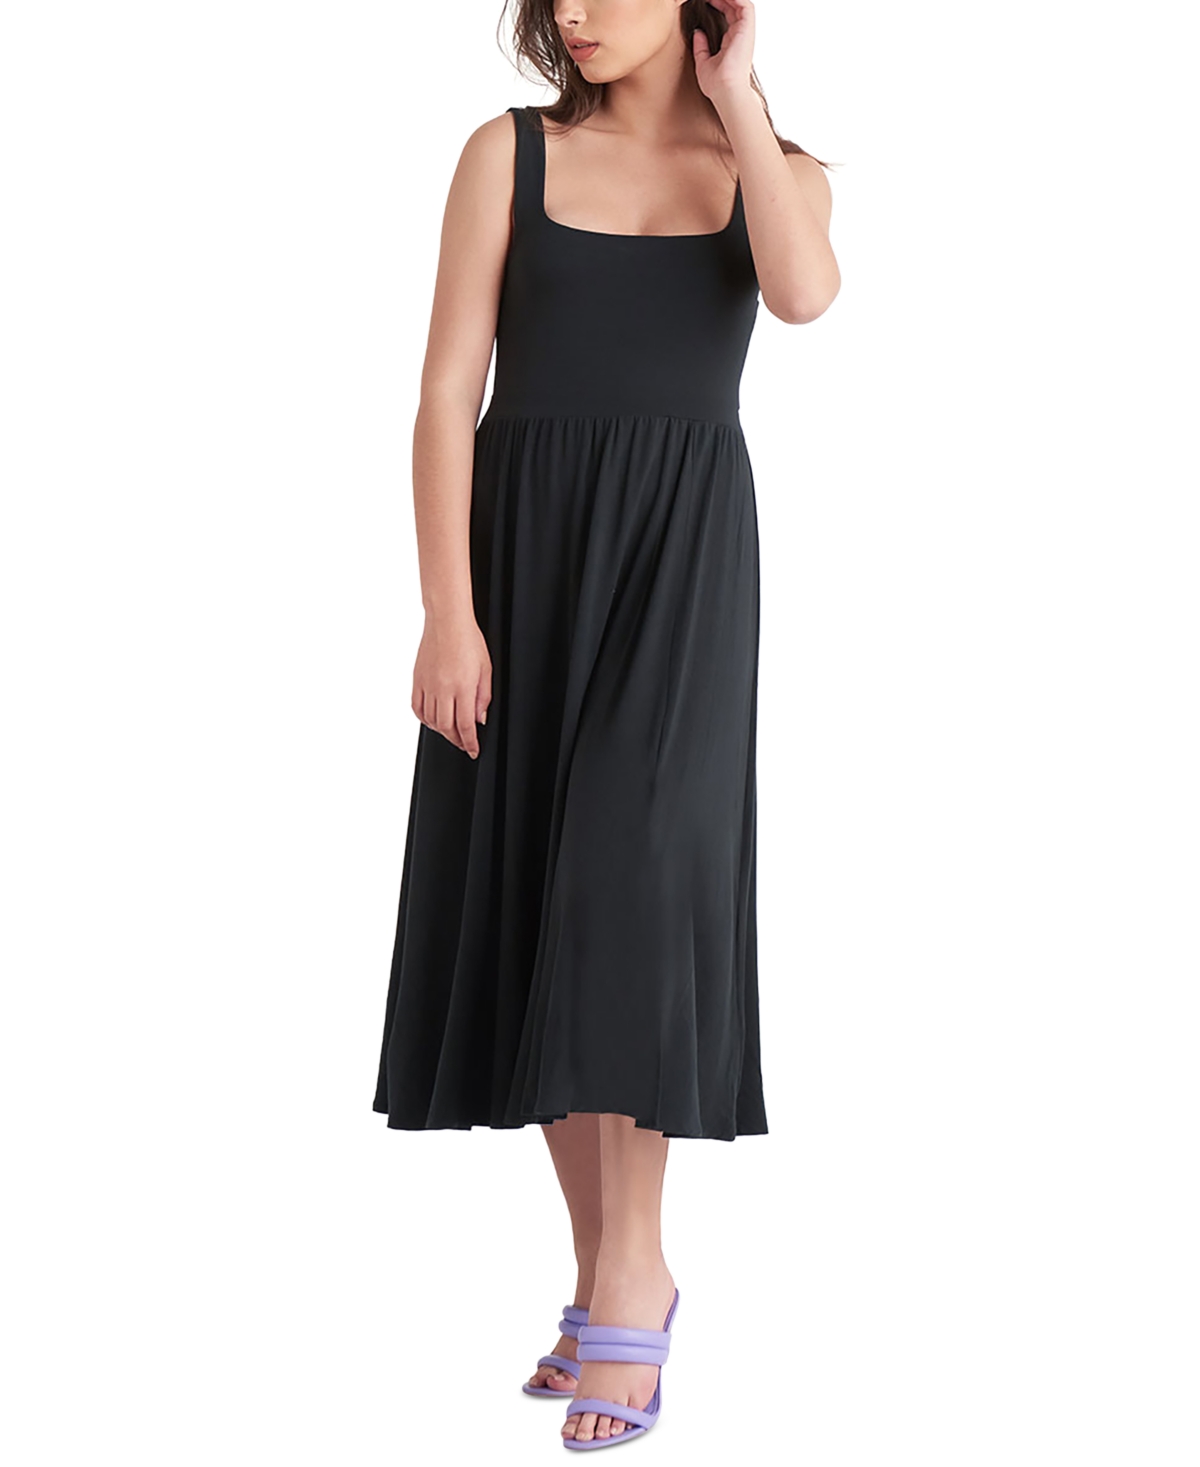 Black Tape Women's Banded-Waist Knit Sleeveless Midi Dress